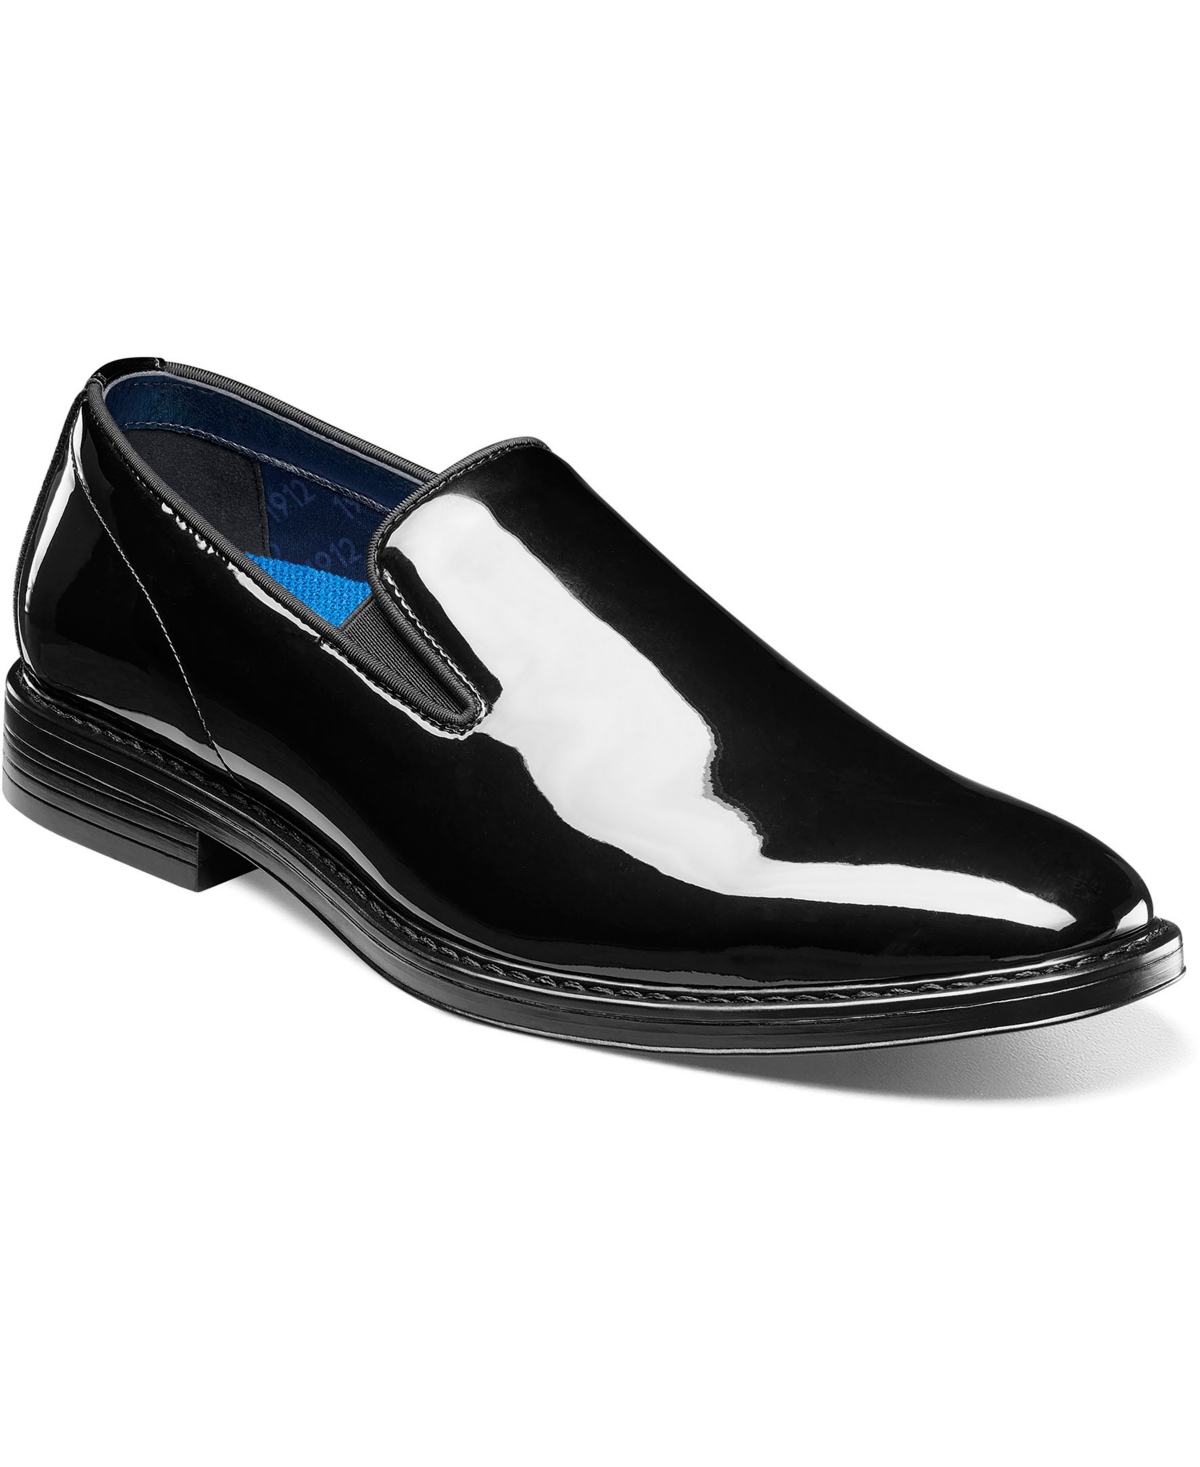 Men's Centro Formal Flex Plain Toe Slip On Dress Shoes - Black Patent